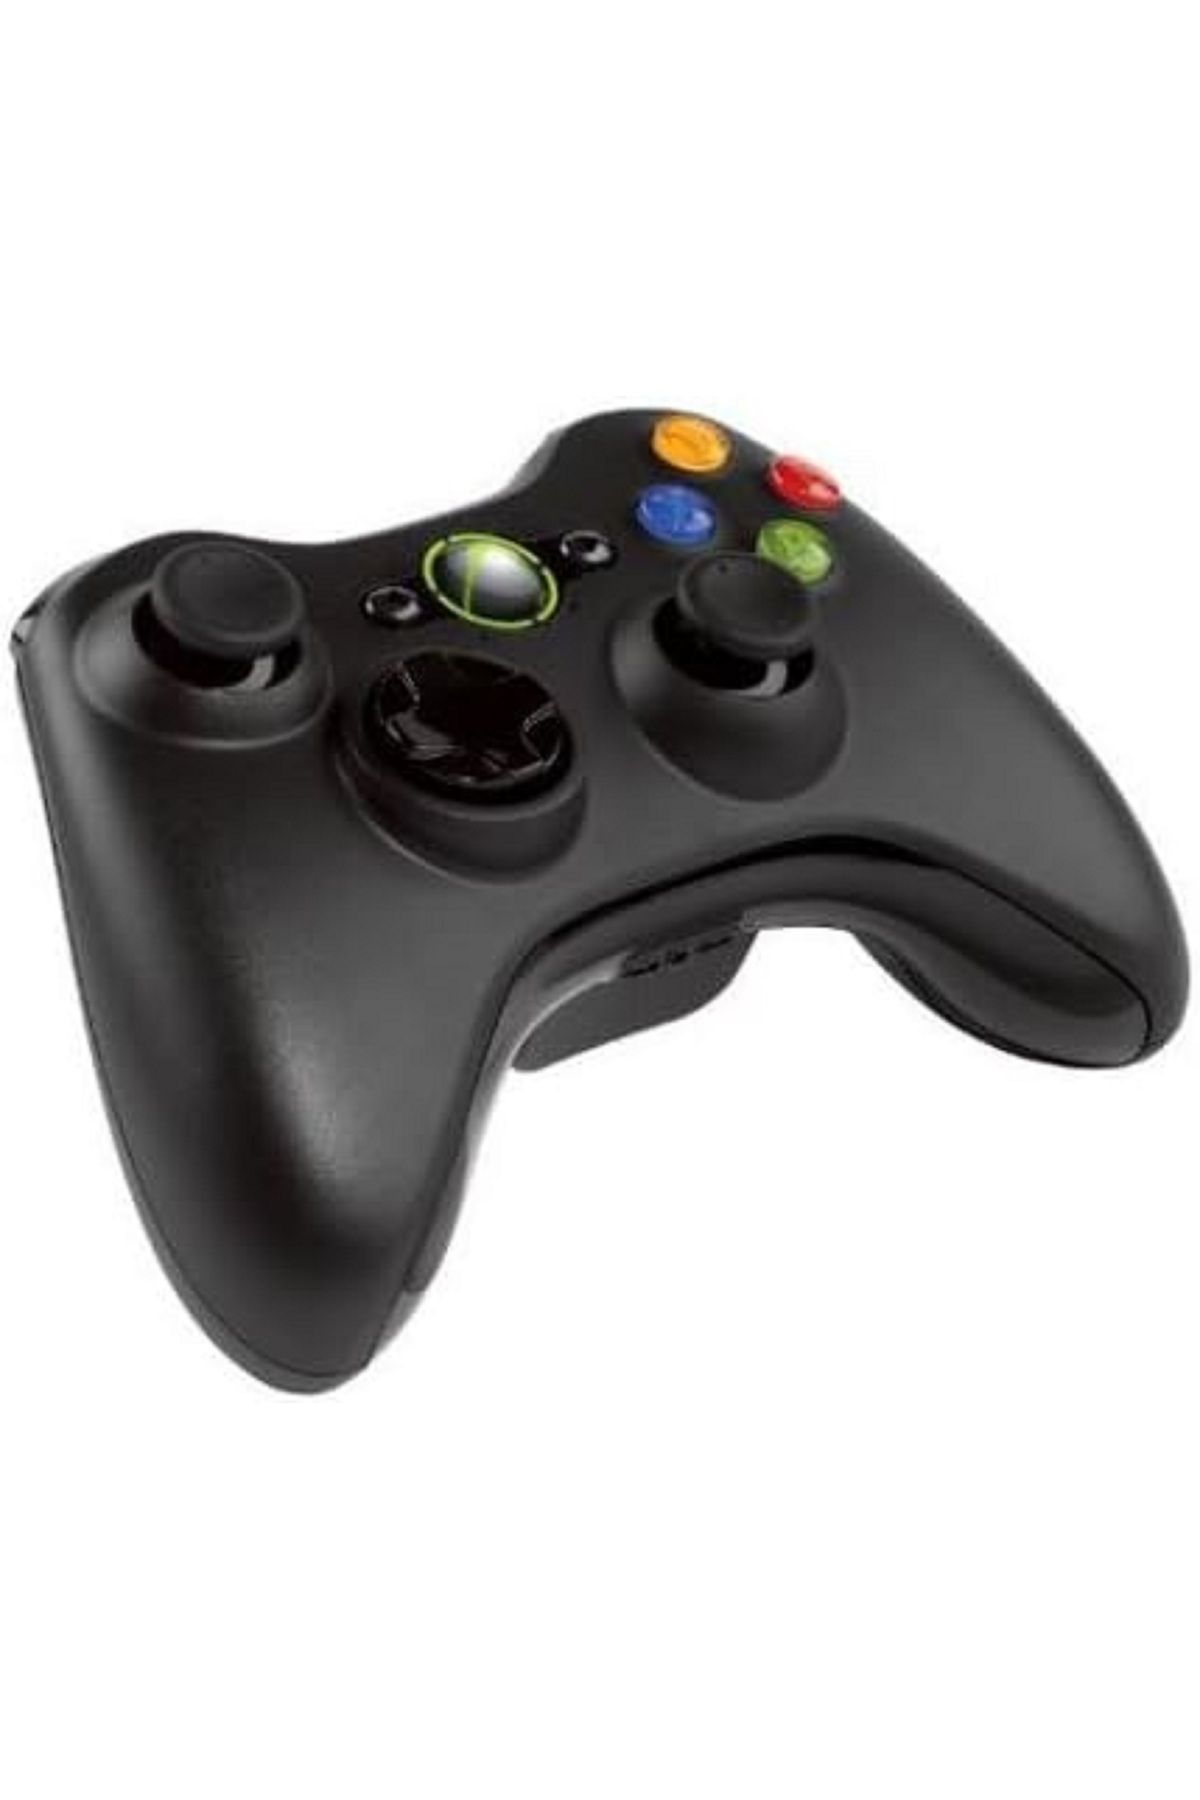 Mmctech Xbox 360 Wireless Kablosuz Kumanda Oyun Kolu Joystick Controller